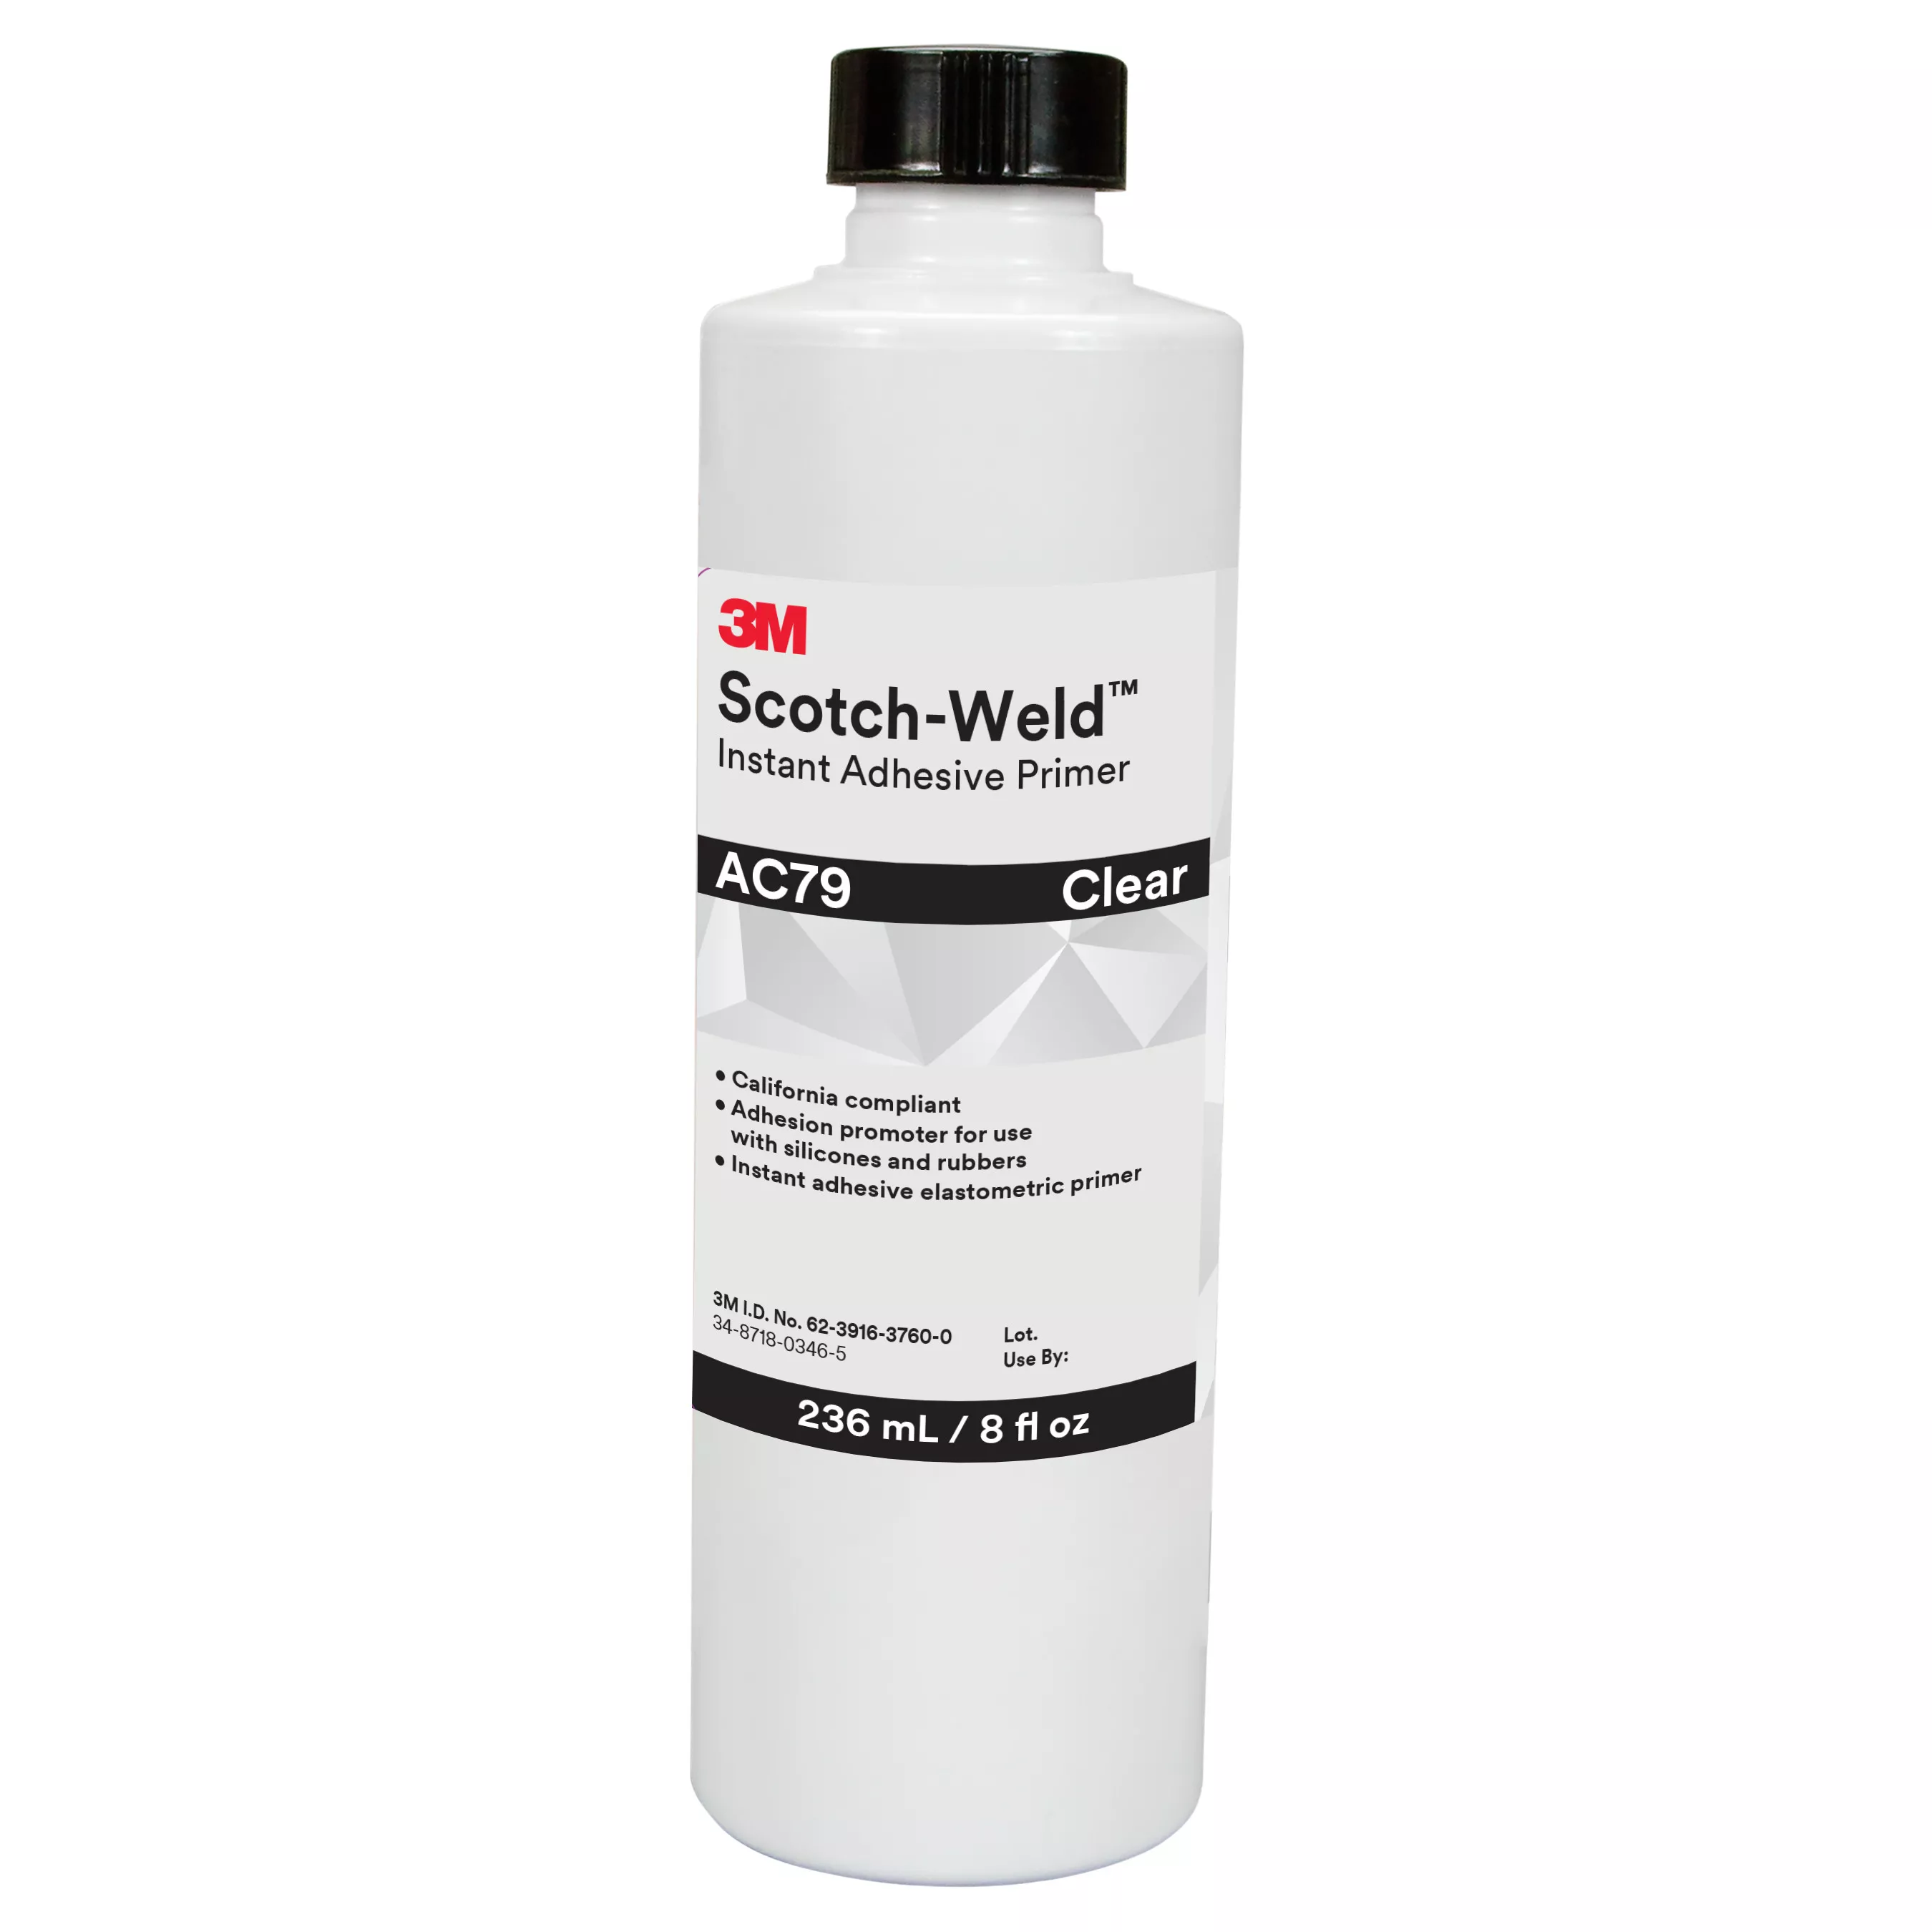 3M™ Scotch-Weld™ Instant Adhesive Primer AC79, Clear, 8 fl o, 4
Bottles/Case